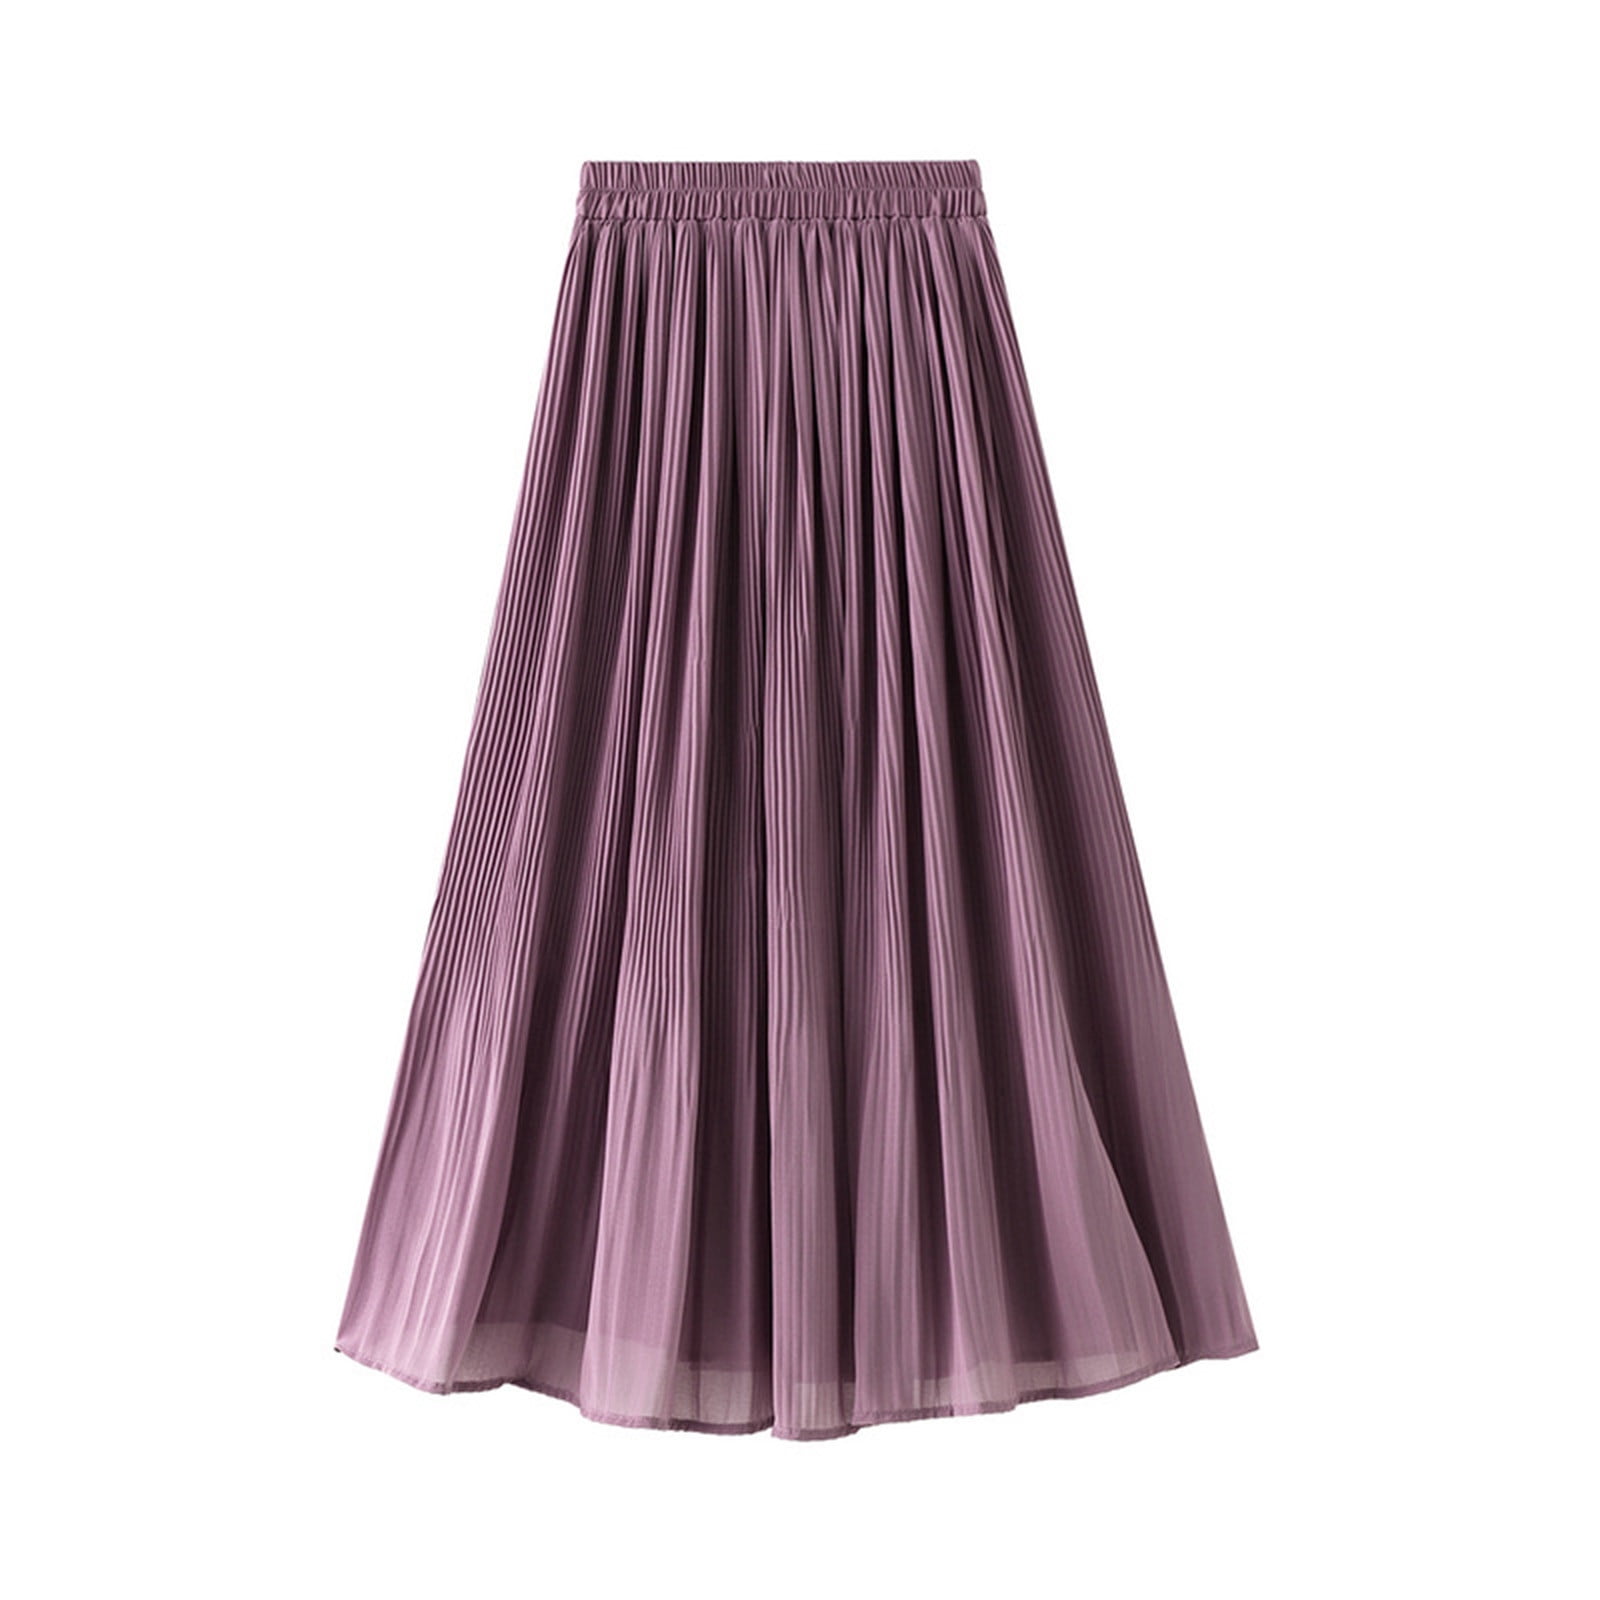 JNGSA Women's Chiffon High Waist Skirt Pleated Solid Color Midi Skirt ...